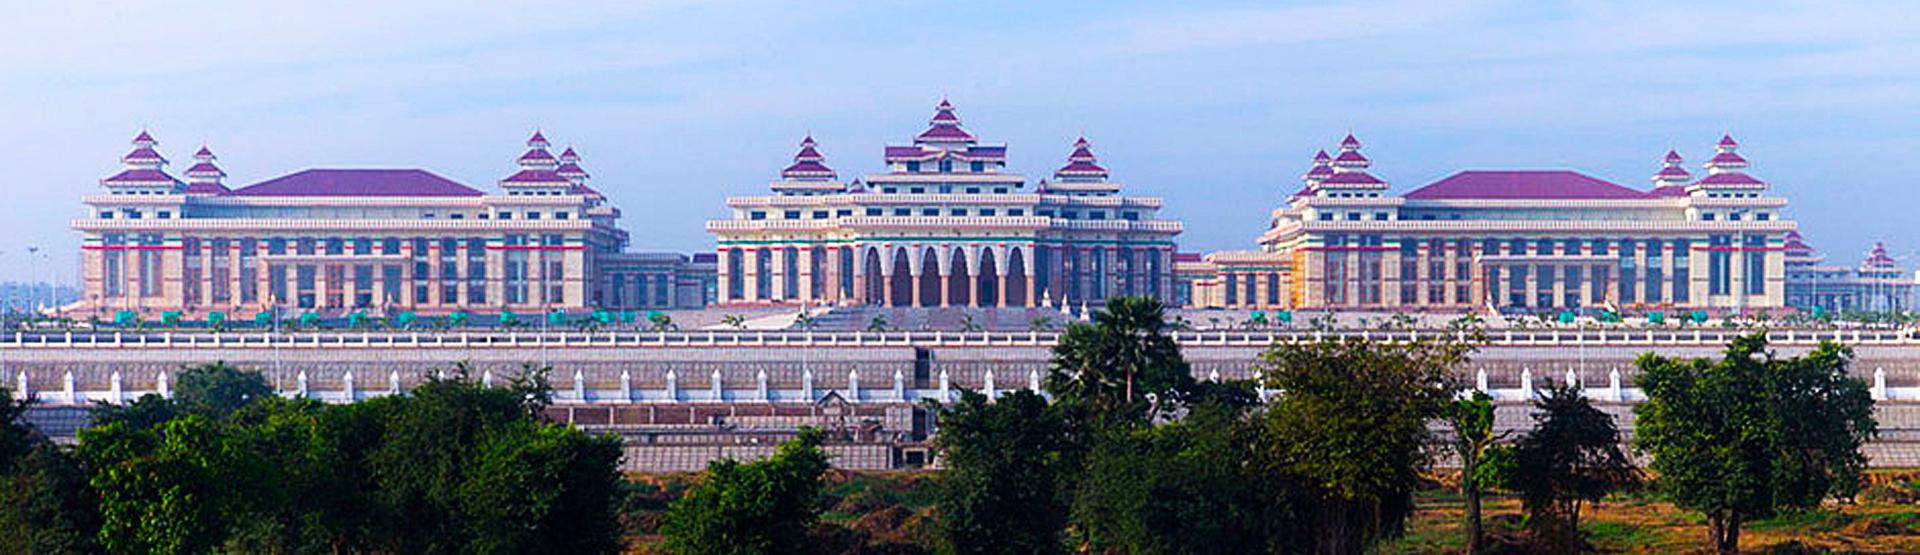 Le monumental Parlement birman dans la capitale Naypyidaw.